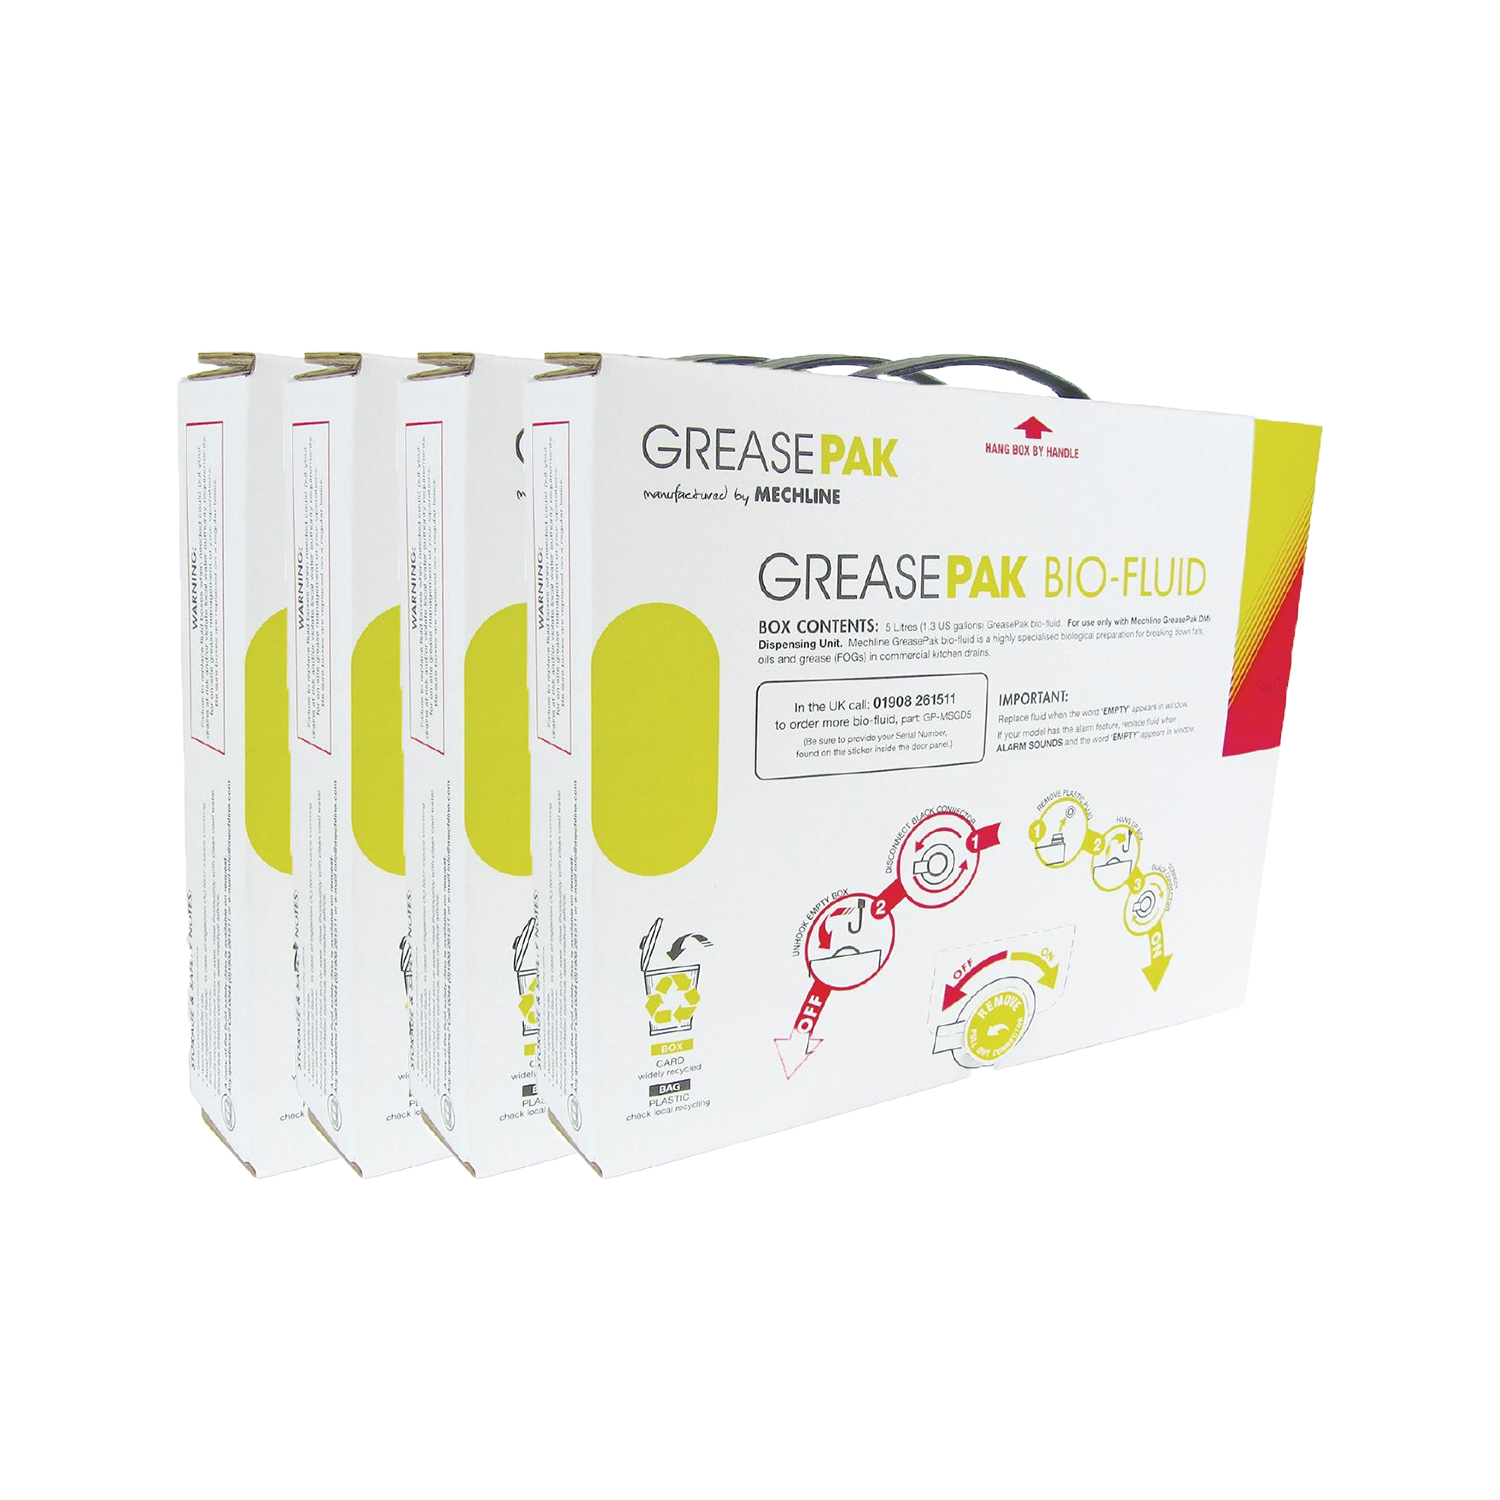 GreasePak MSGD5 Dosing Fluid x 12 - 1 Years Supply